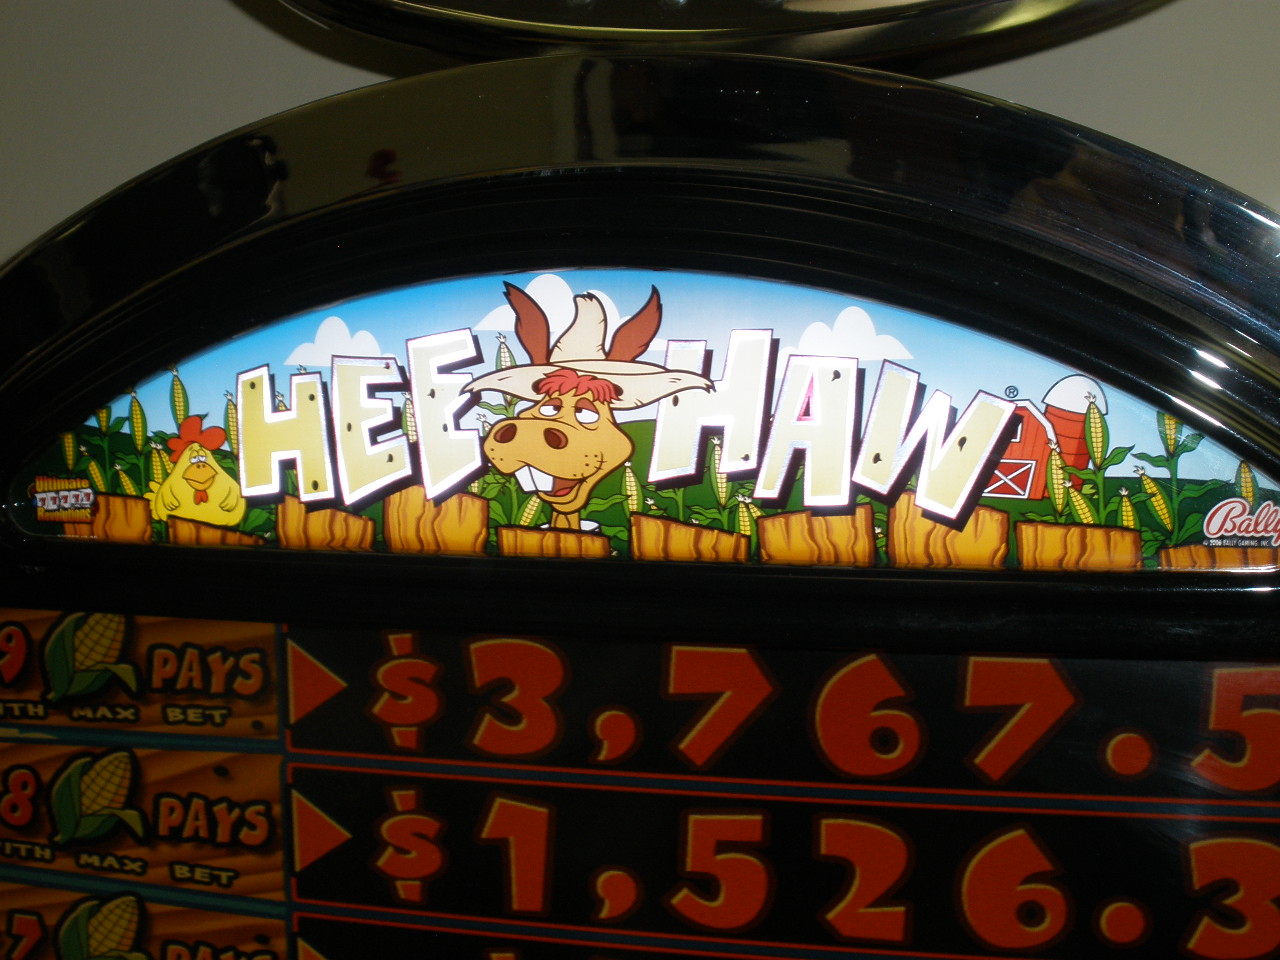 hee haw slot machine jackpot images